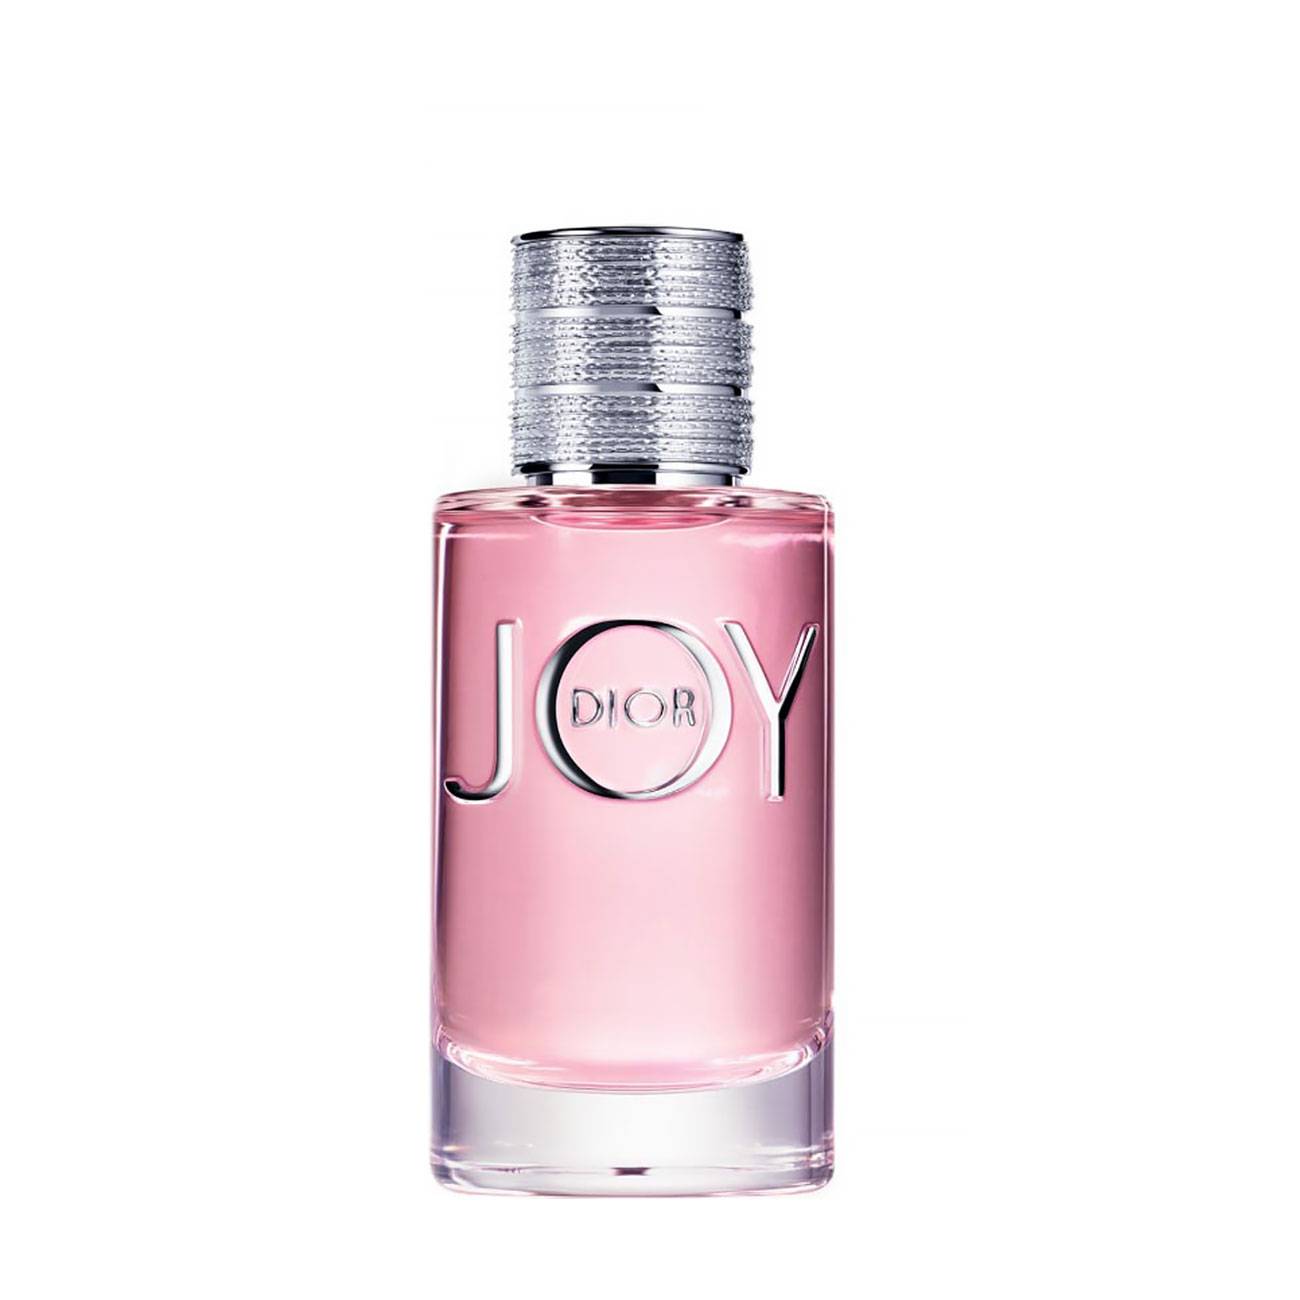 Apa de Parfum Dior JOY 90ml cu comanda online